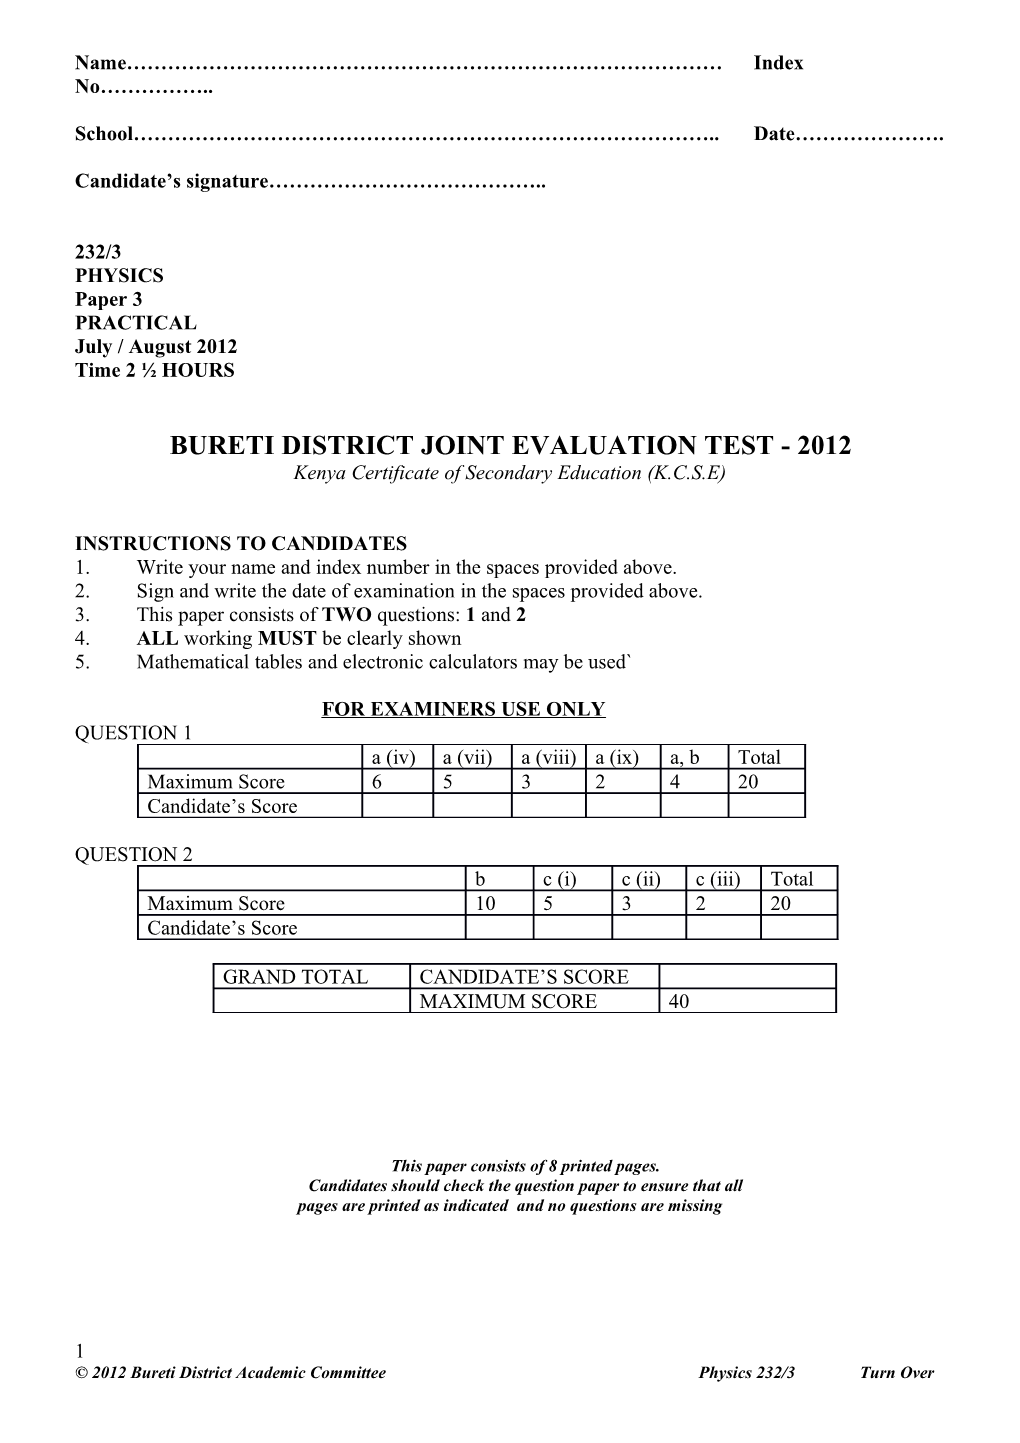 Bureti District Joint Evaluation Test - 2012